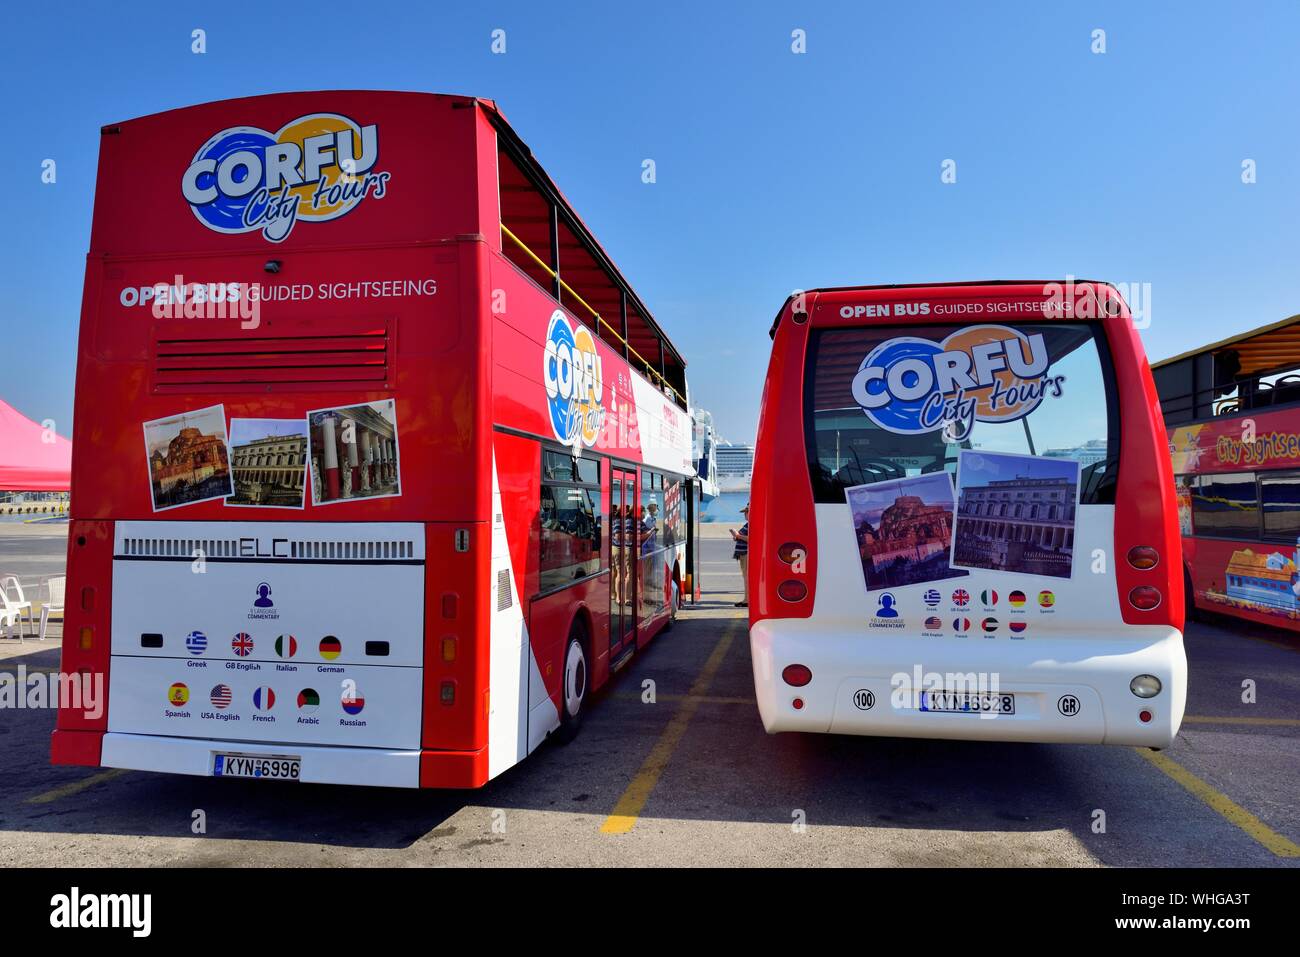 Corfu City Tours,open top bus,buses,guided sightseeing,Corfu,Kerkyra,Kerkira,Greece,Ionian Islands Stock Photo